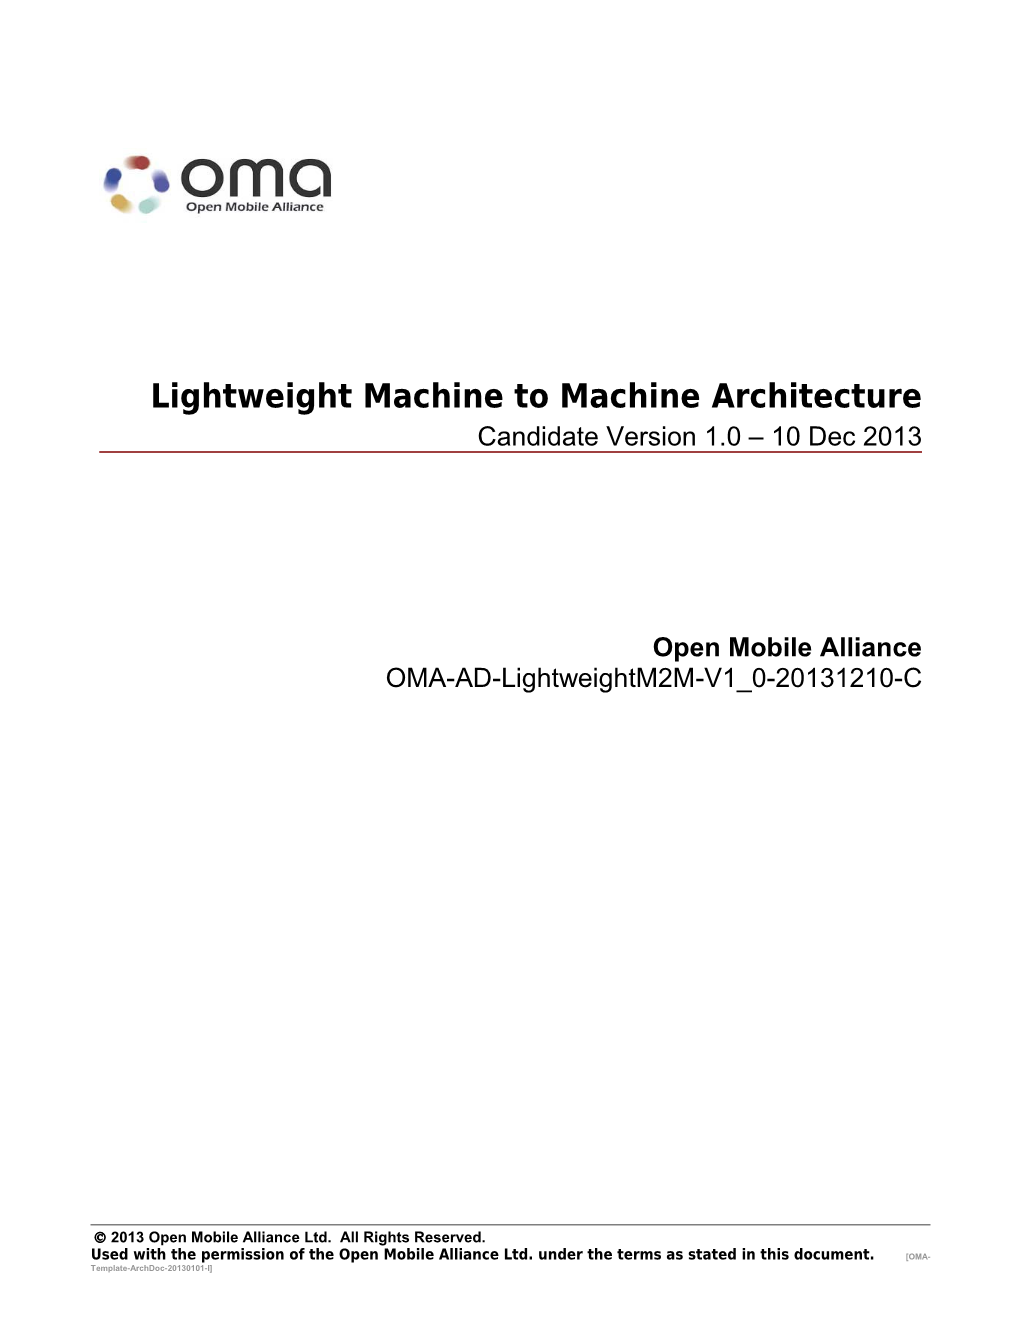 OMA-AD-Lightweightm2m-V1 0-20131210-Cpage 1 V(12)